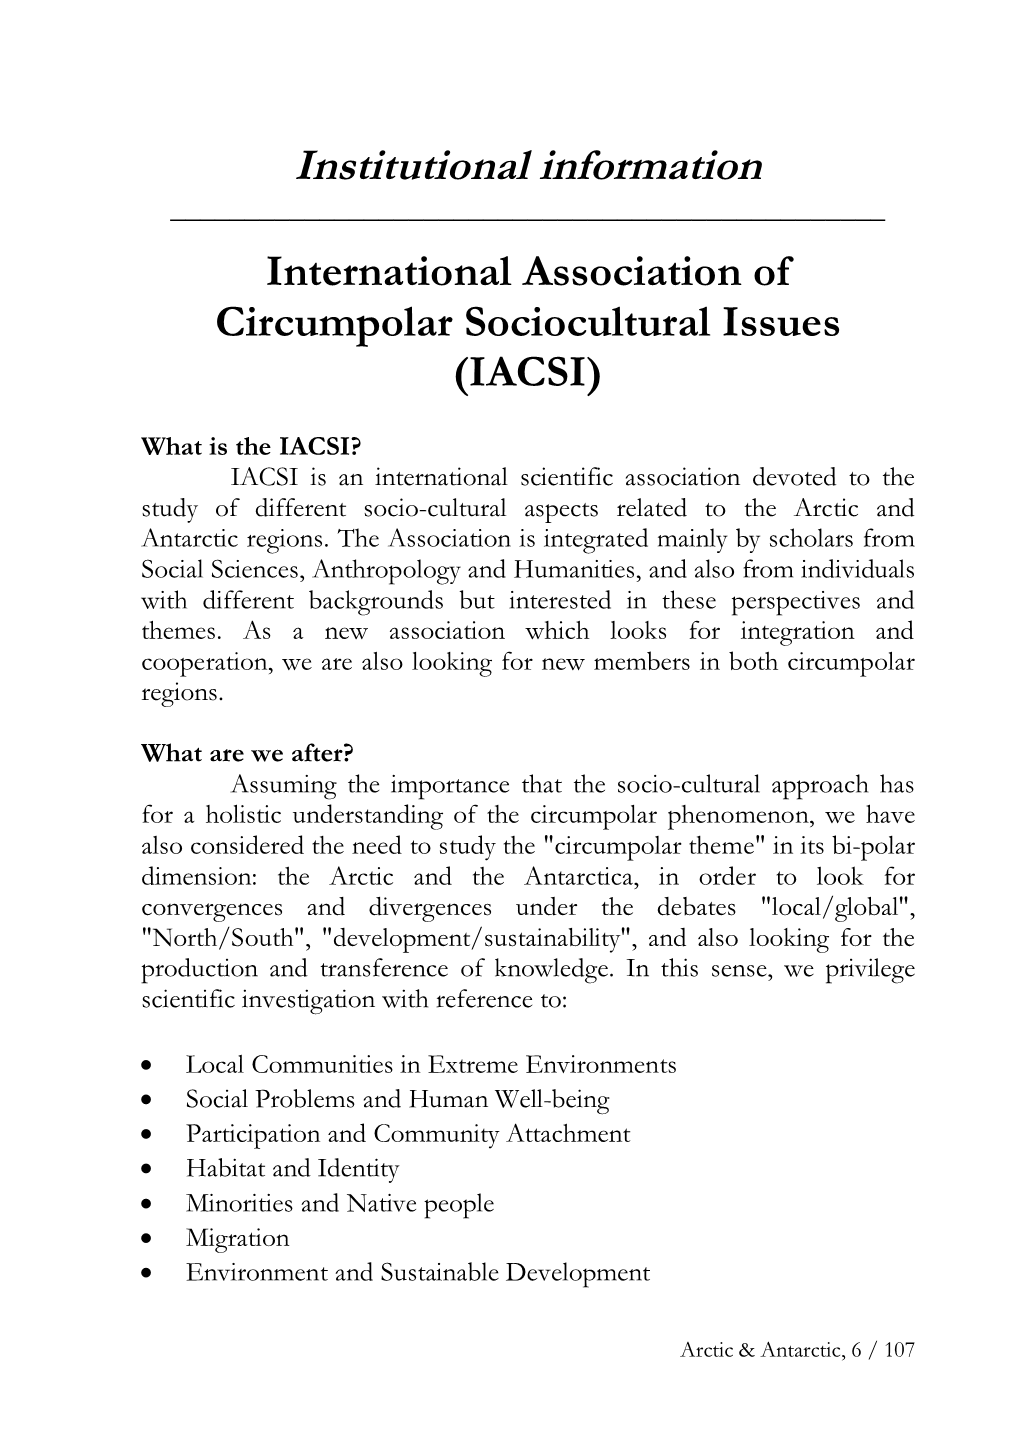 Institutional Information International Association of Circumpolar